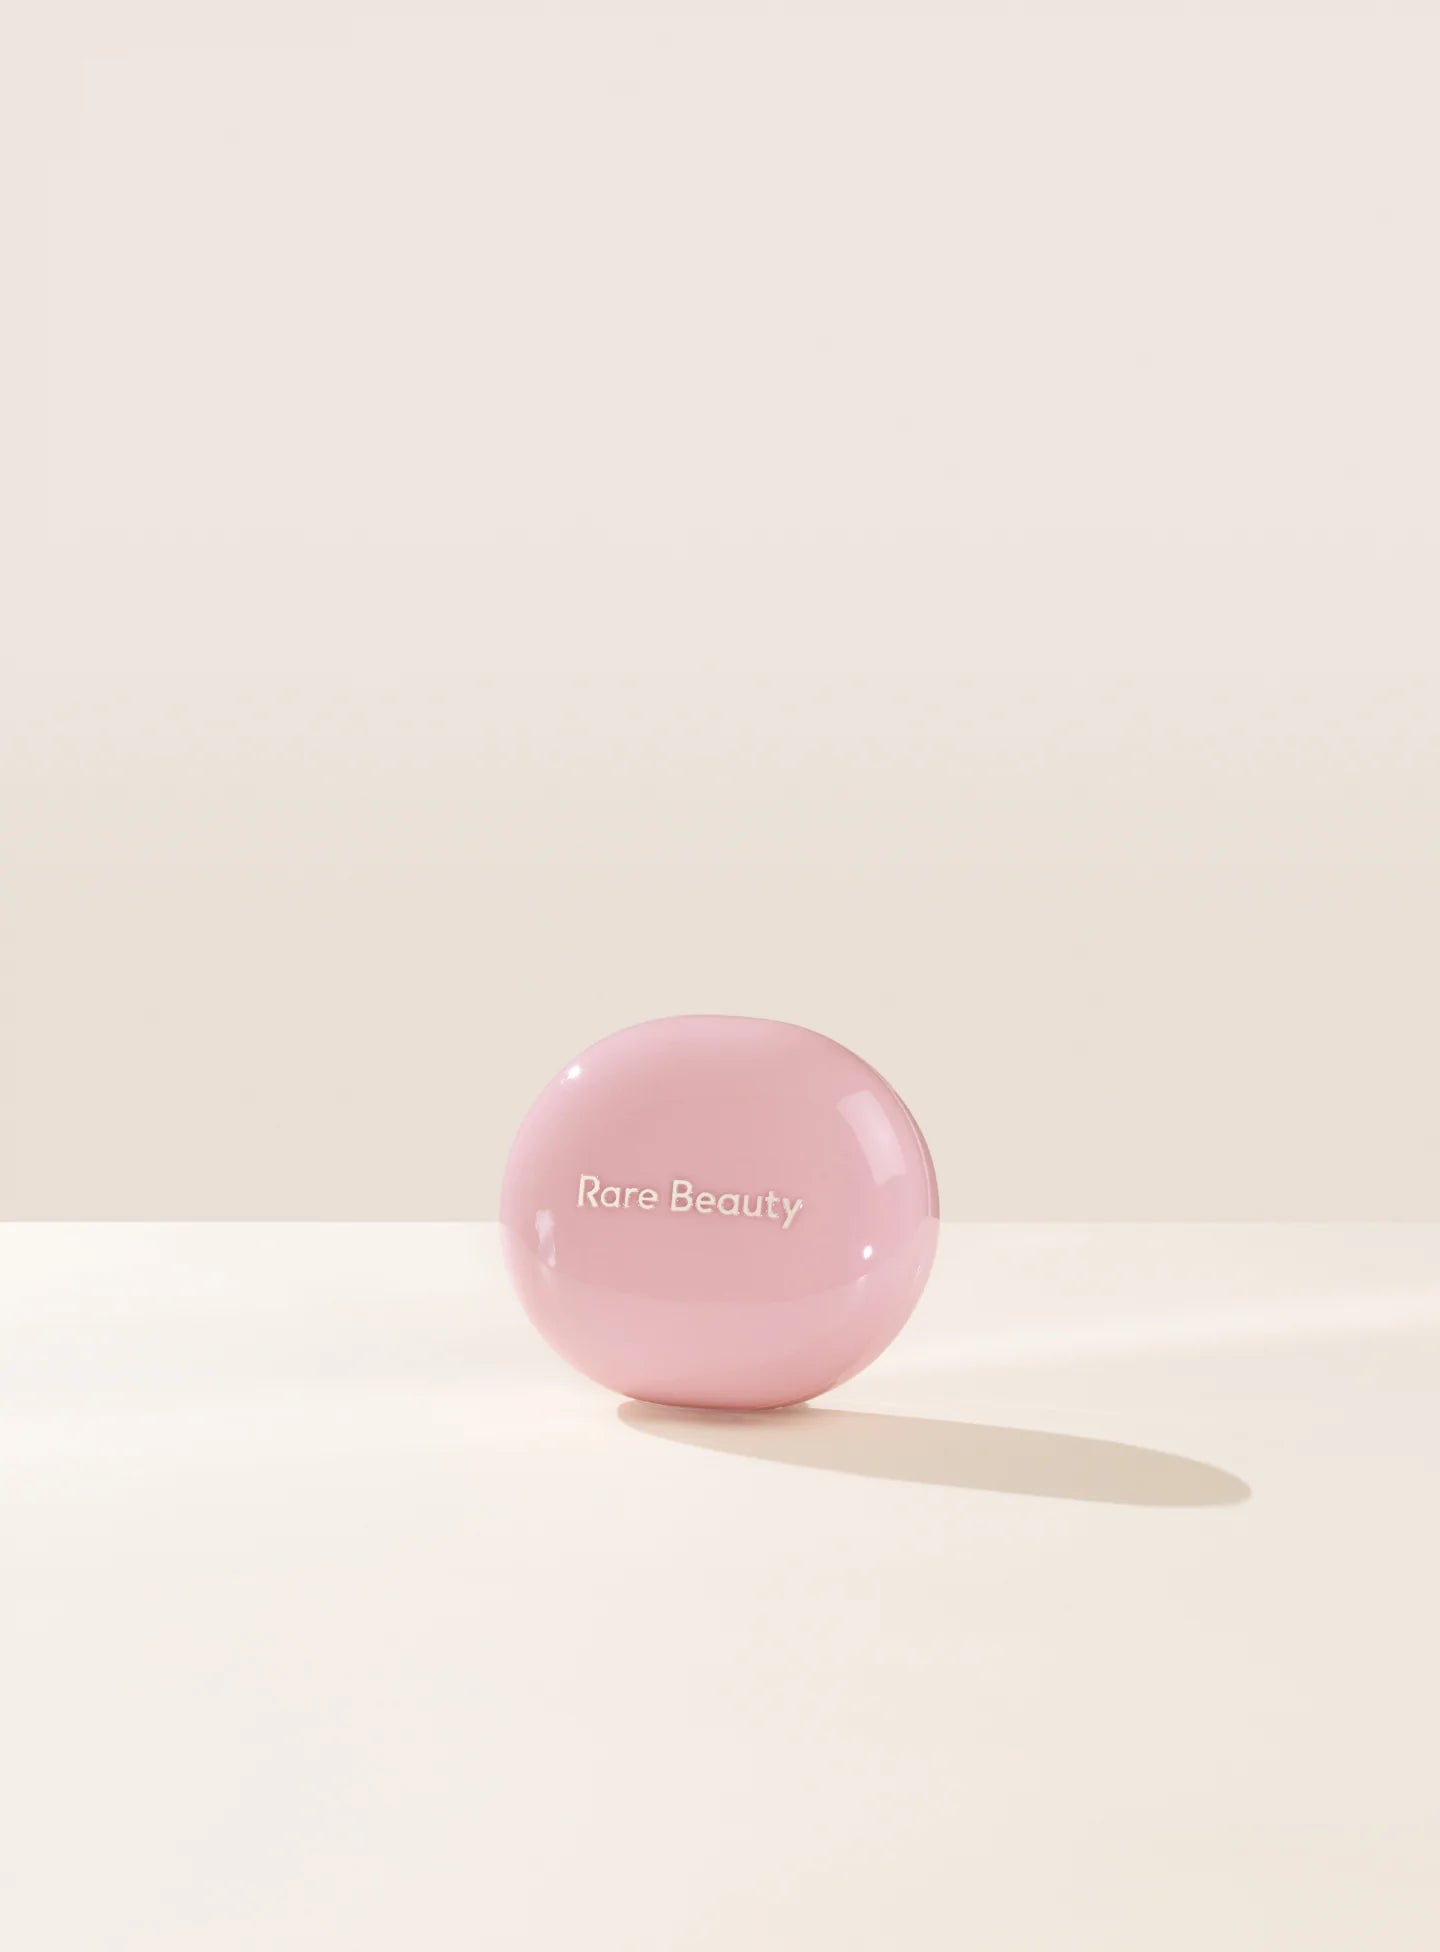 Rare Beauty by Selena Gomez | Stay Vulnerable Melting Cream Blush | Nearly Apricot